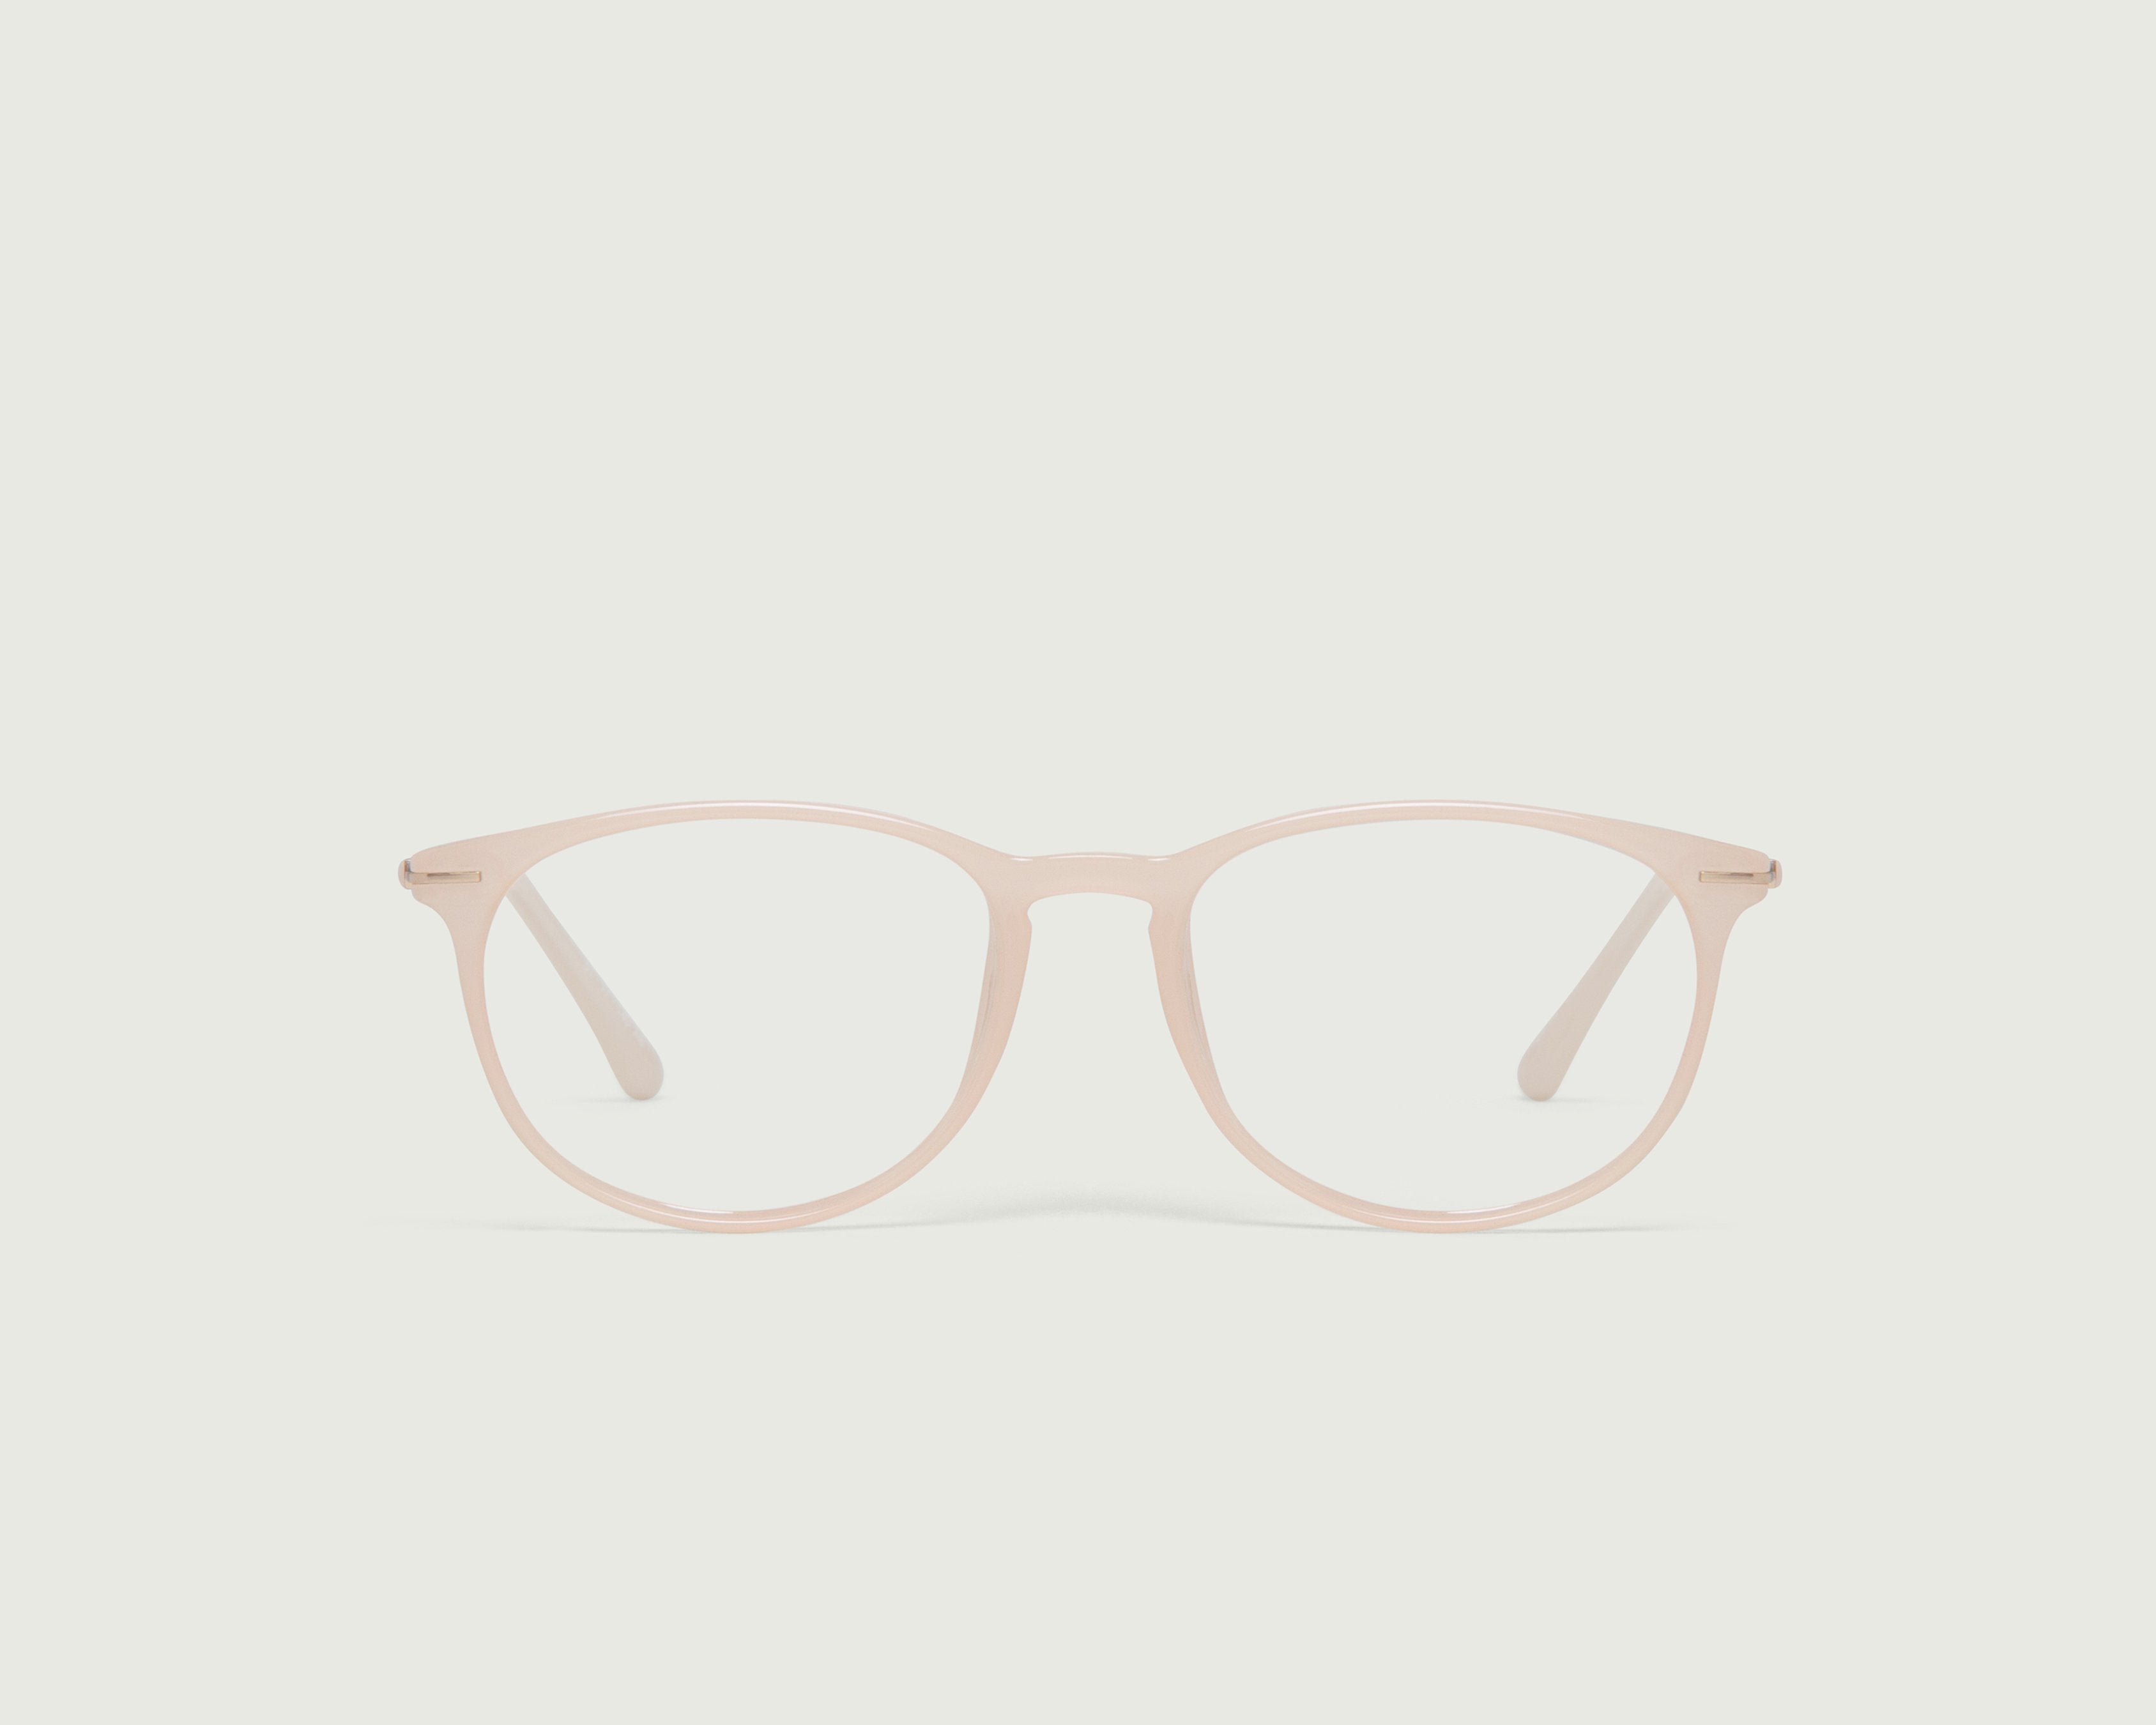 Quartz::Zola Eyeglasses round white plastic front